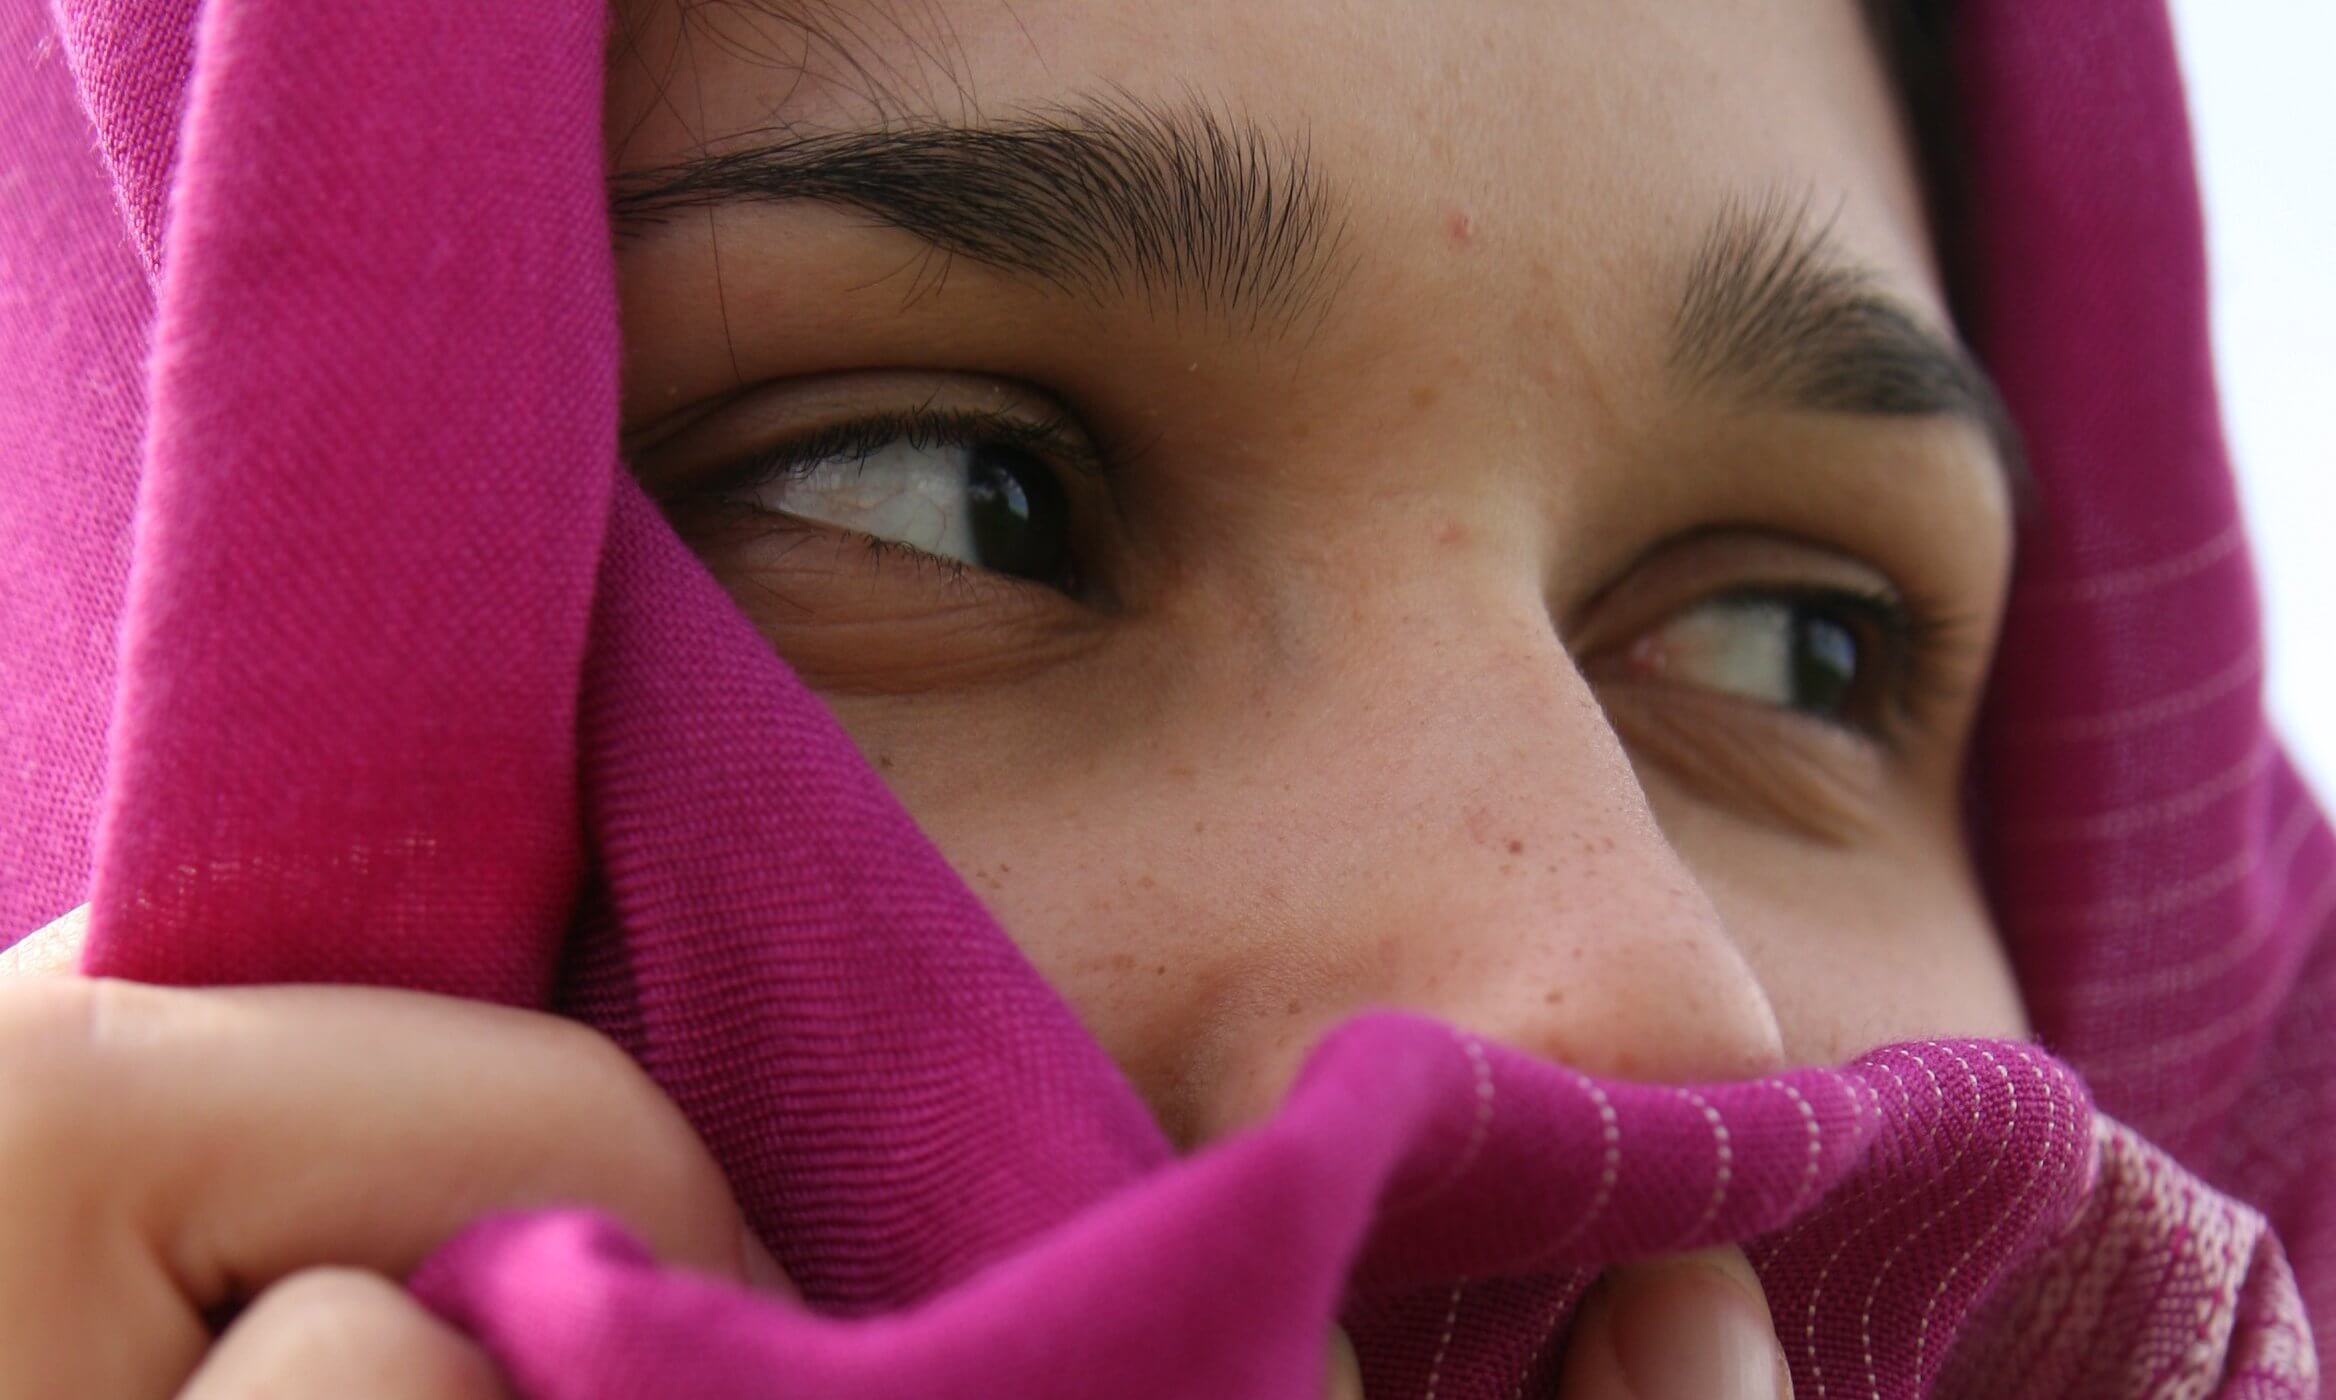 Afghan woman wearing a pink head scarf